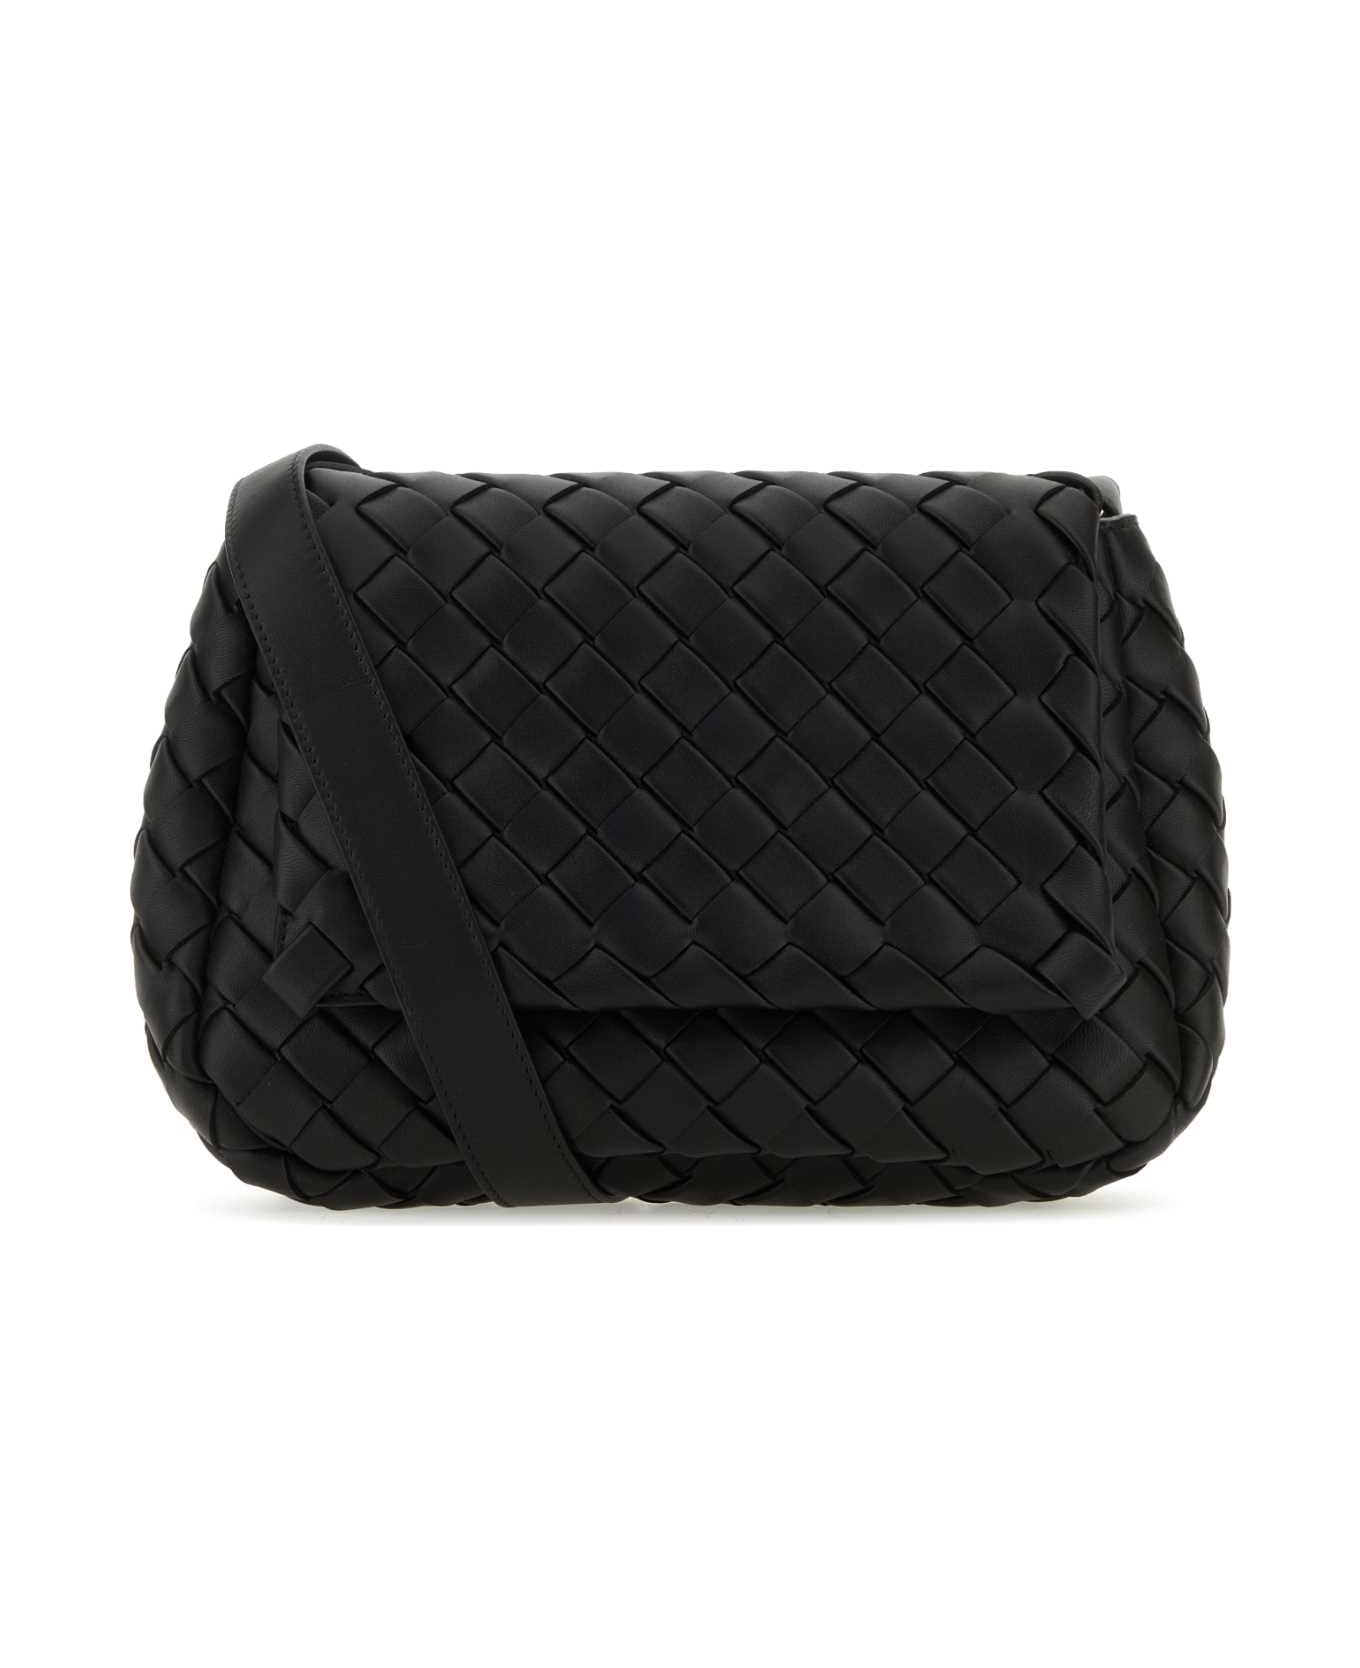 Bottega Veneta Black Leather Small Cobble Crossbody Bag - BLACKSILVER